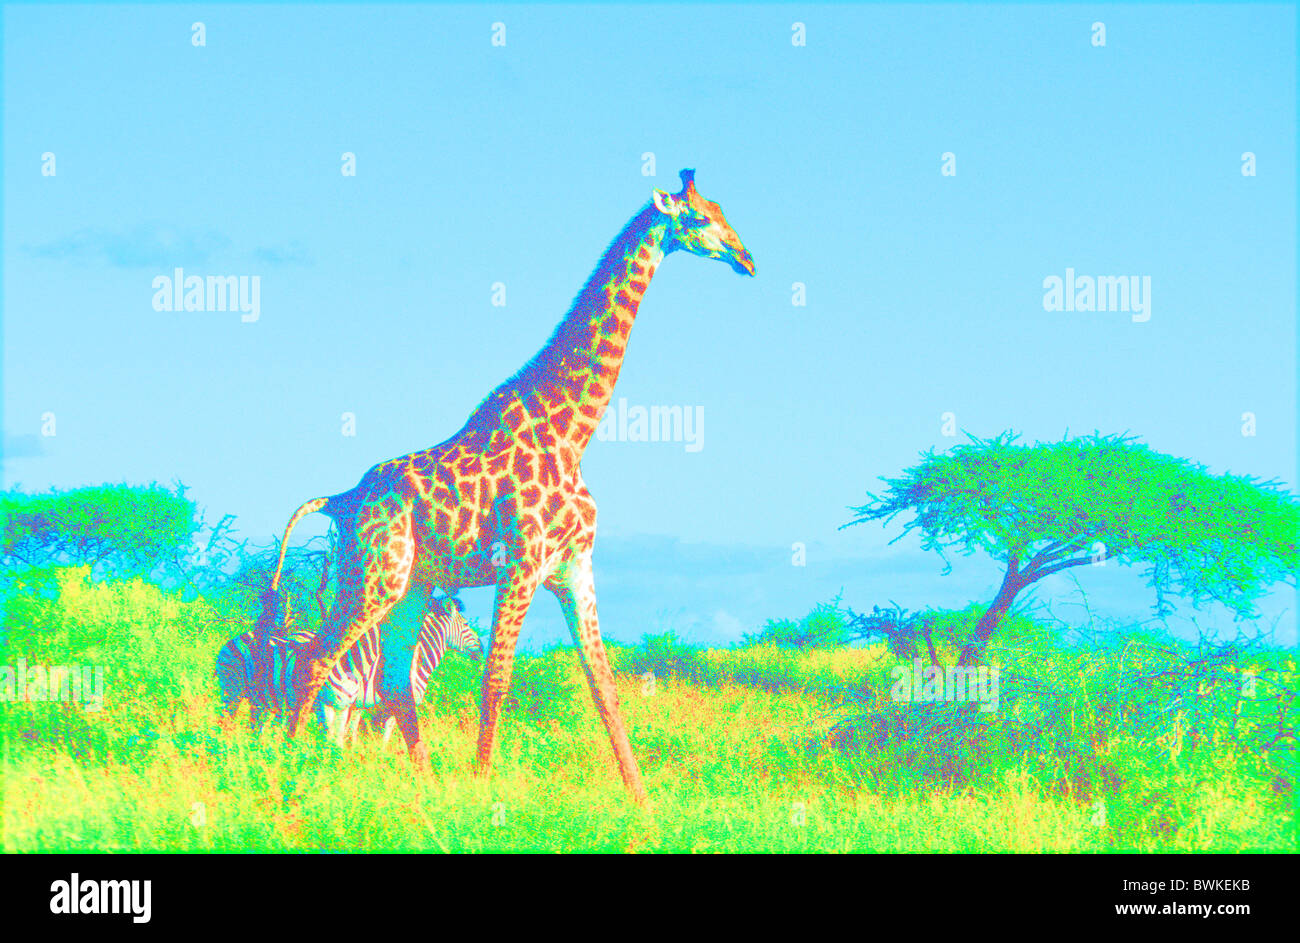 computer graphic arts graphic arts giraffe zebra animals animal Africa savanna effect wrong colors symbol Stock Photo